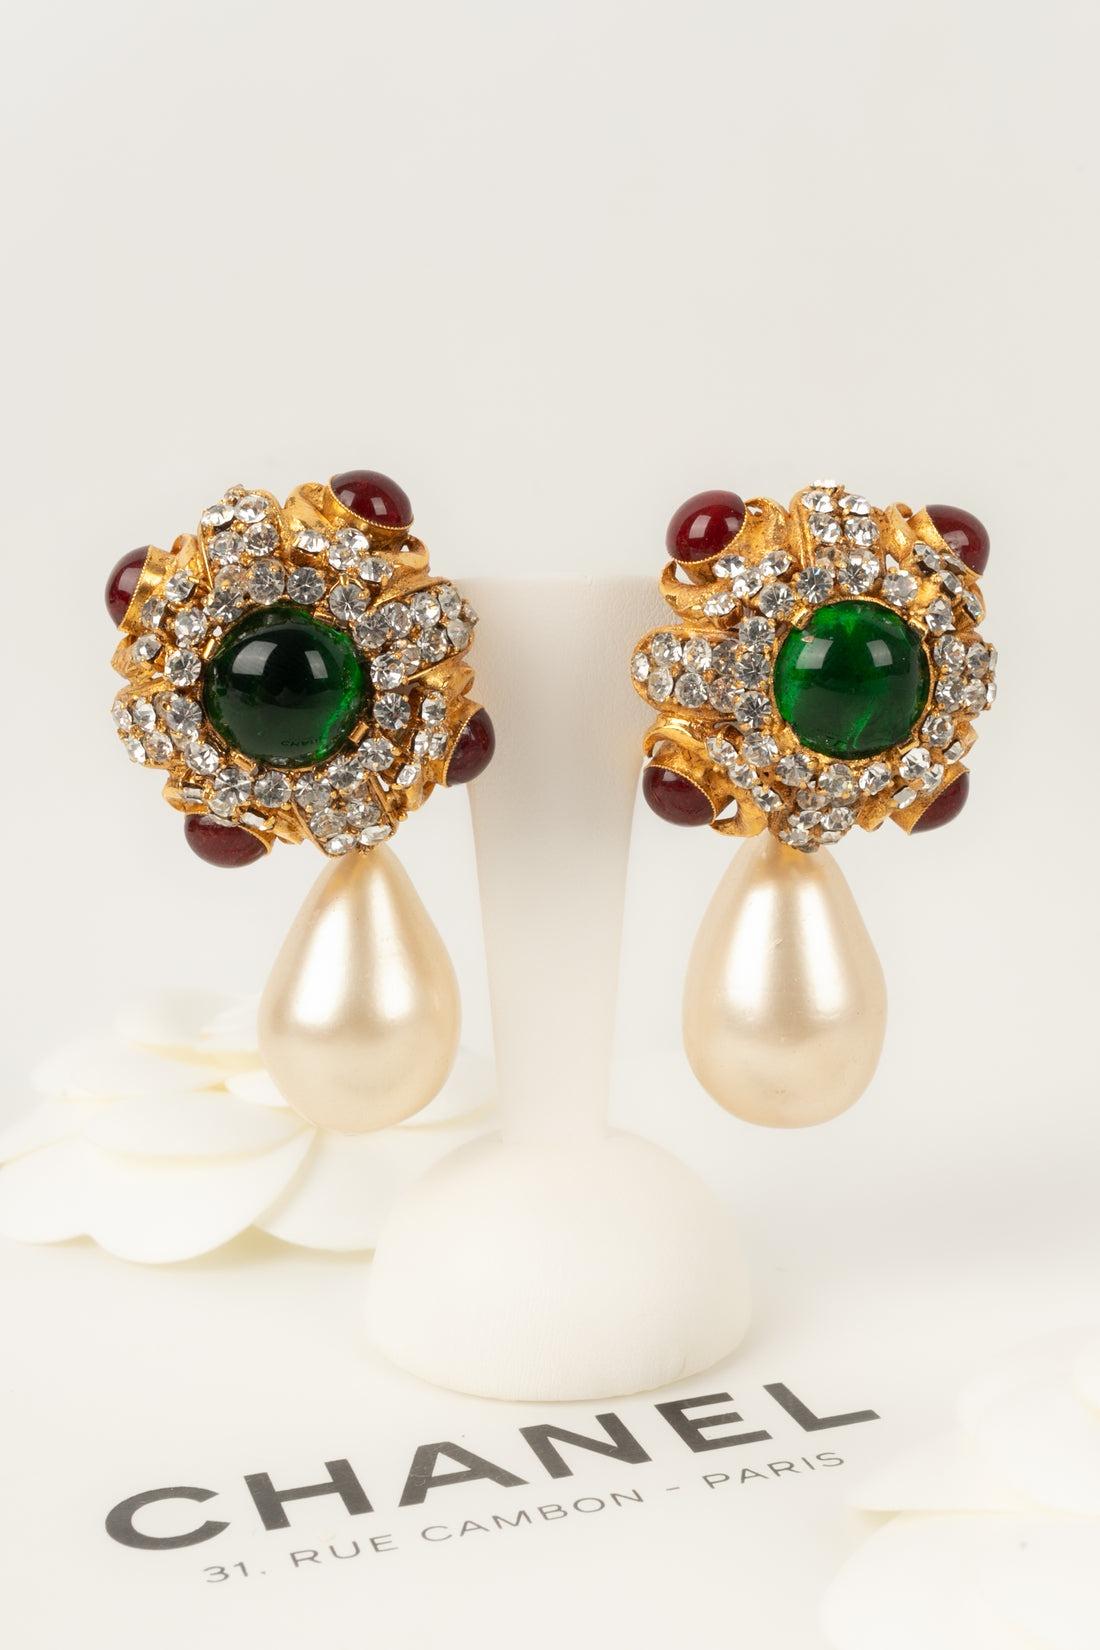 Chanel Golden Metal Earrings with Swarovski Rhinestones For Sale 4